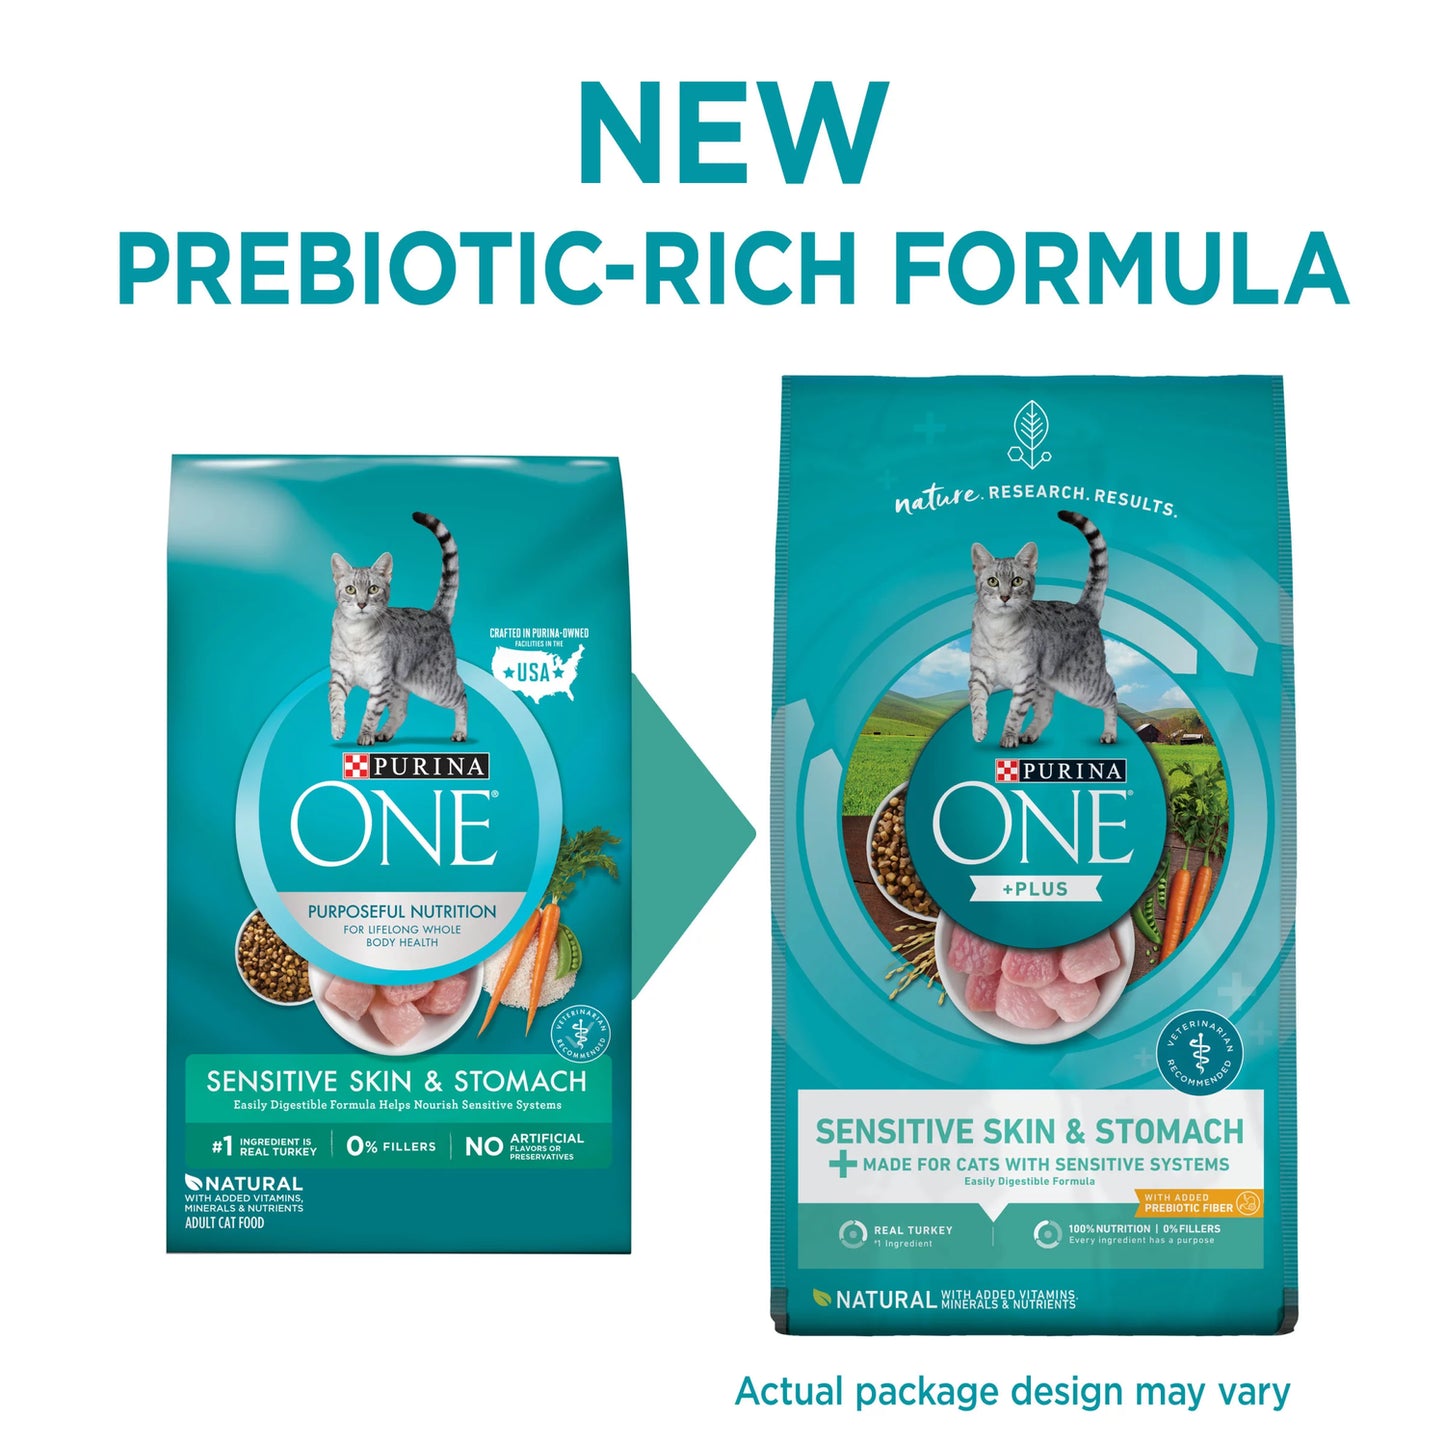 Purina ONE Natural Dry Cat Food, Sensitive Skin & Stomach Formula, 3.5 Lb. Bag